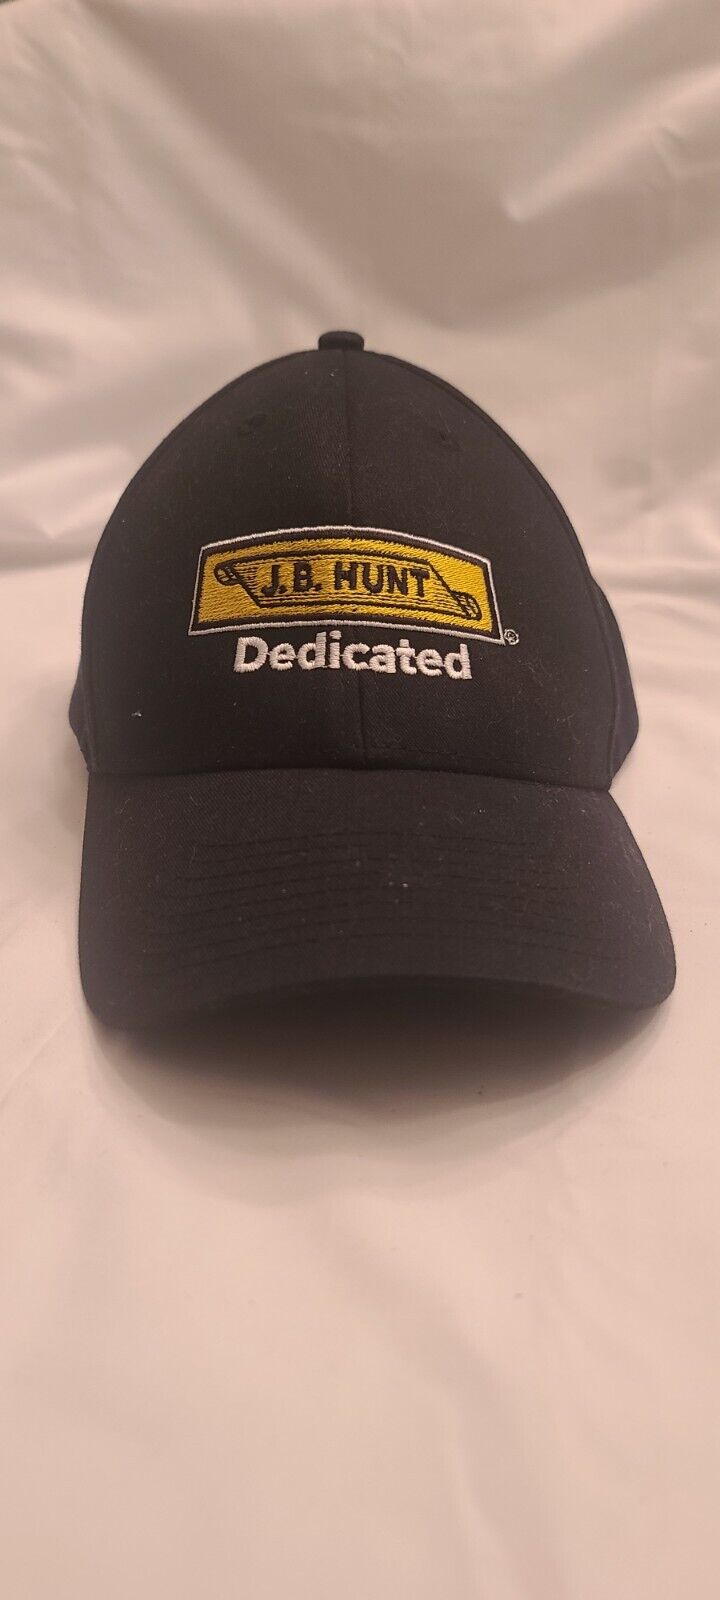 J.B. Hunt Dedicated Baseball Style Hat Black, Yellow, White. Cintas